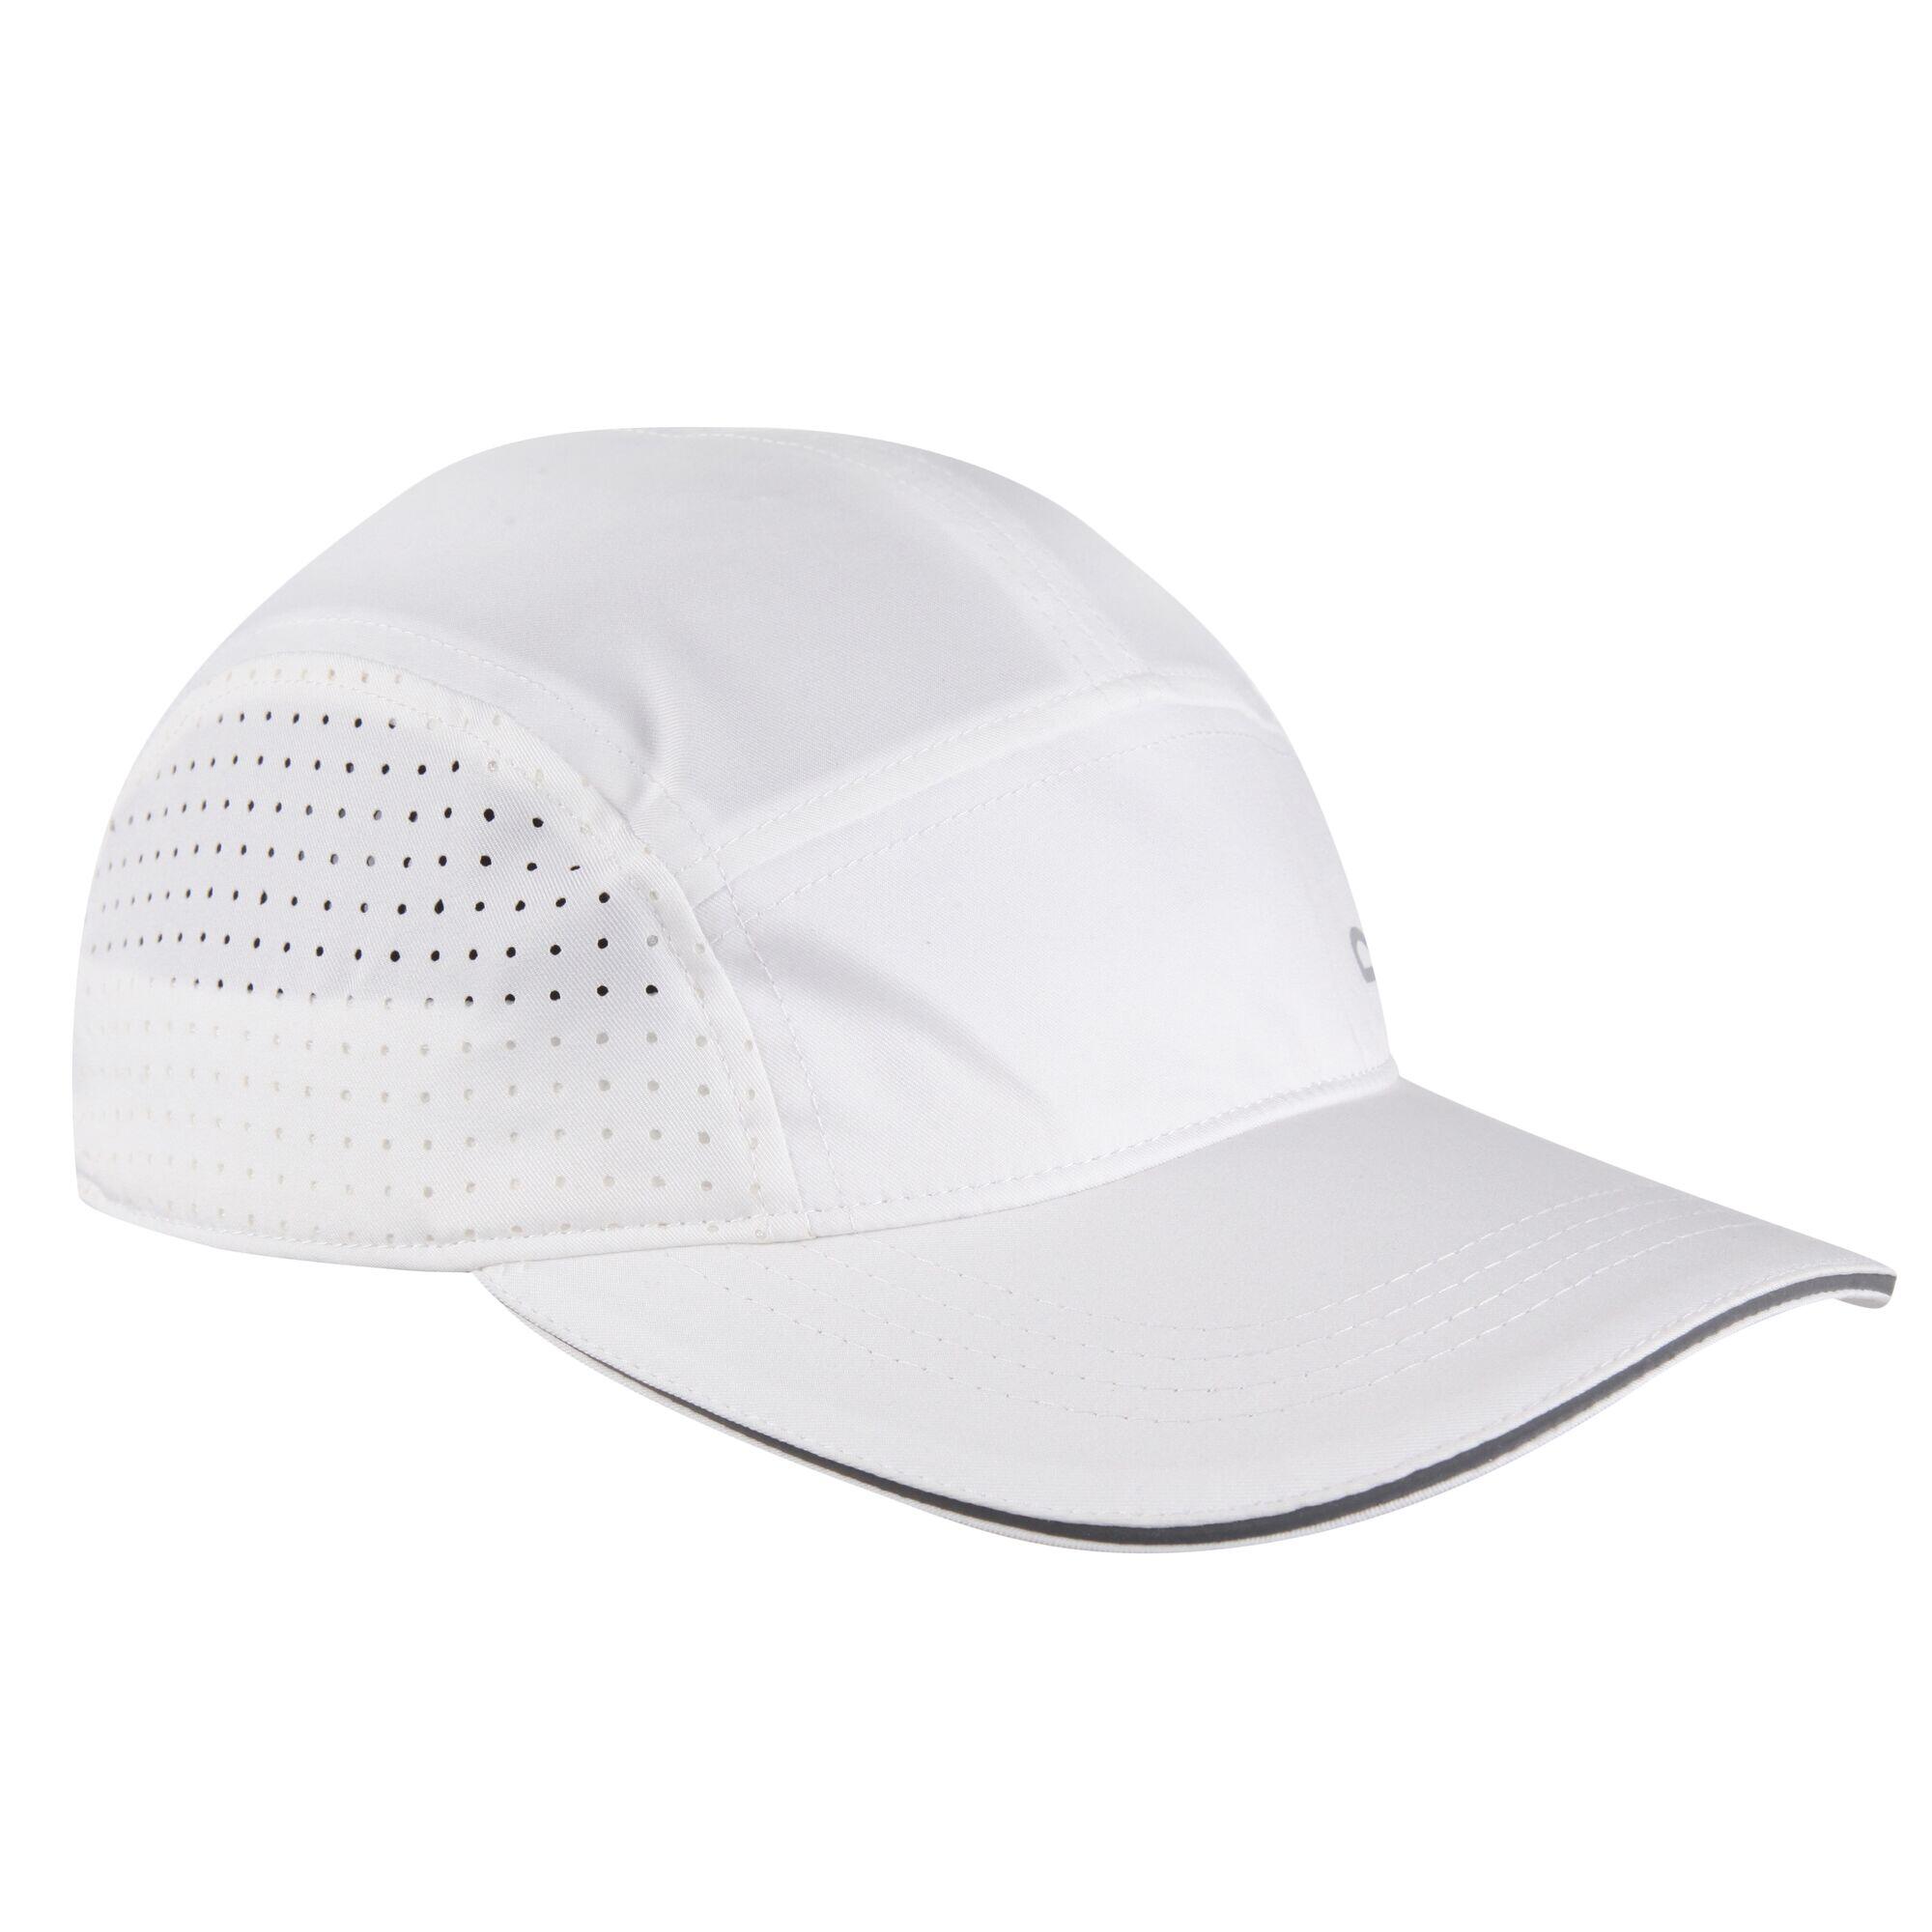 Unisex Adult Active Cap (White) 4/5